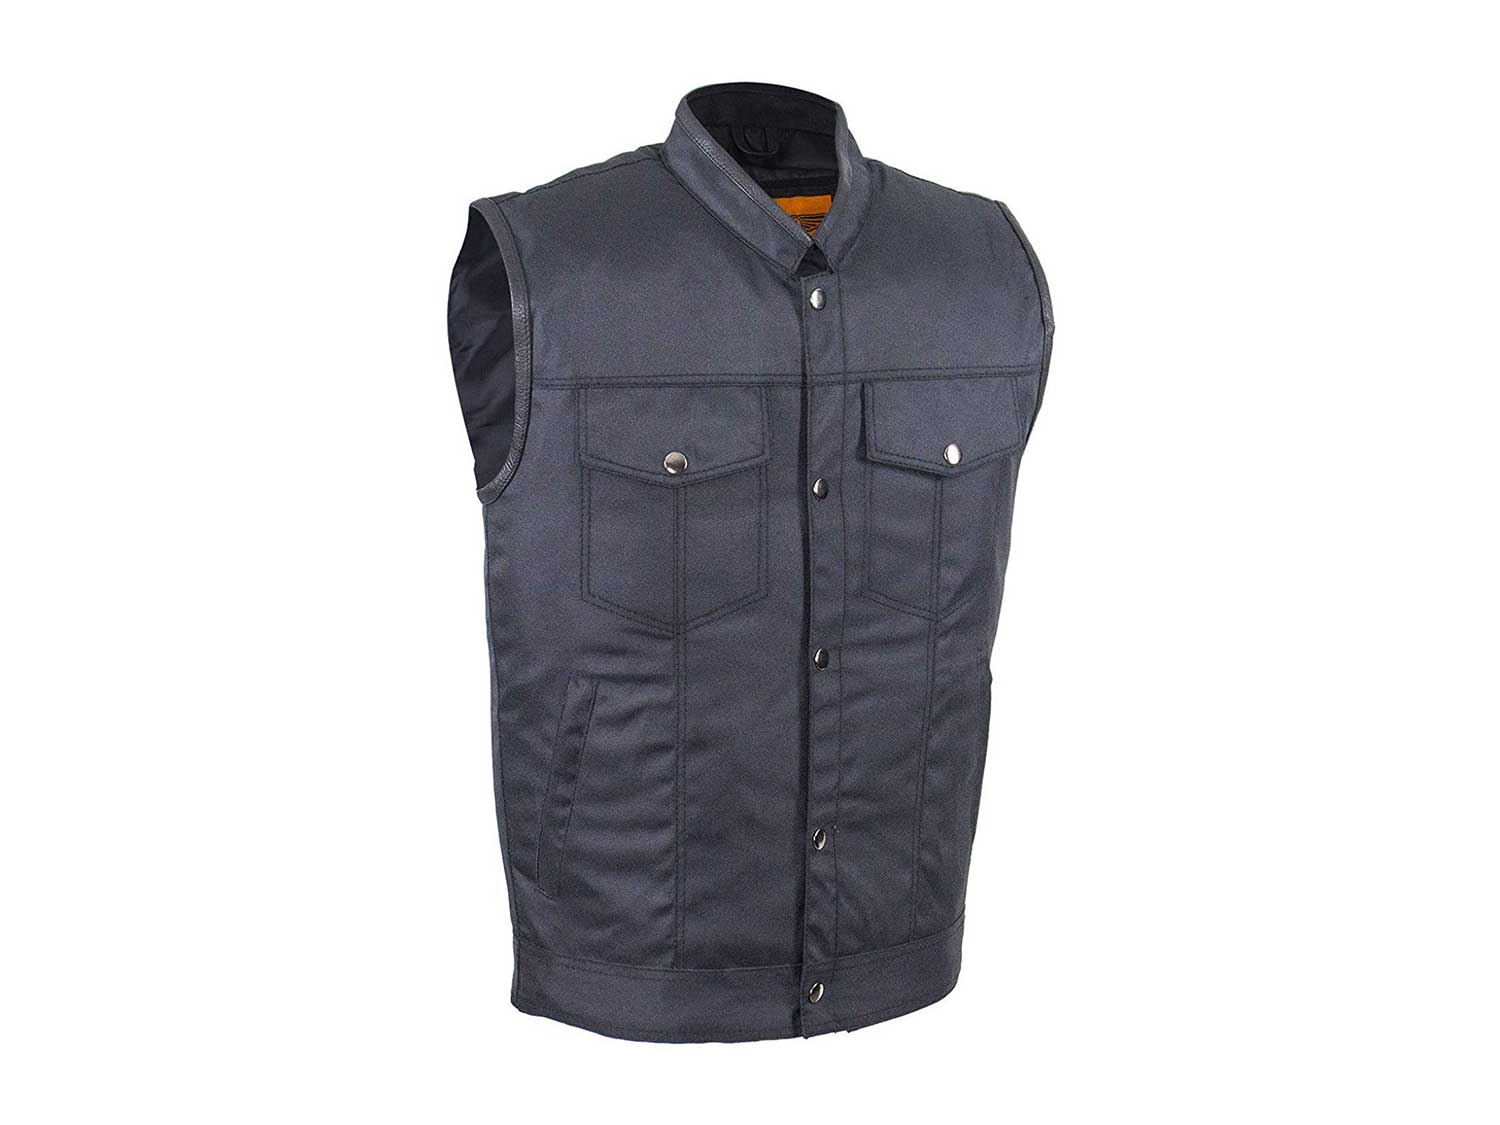 Men’s Black Textile Motorcycle Club Vest With Snap Pockets